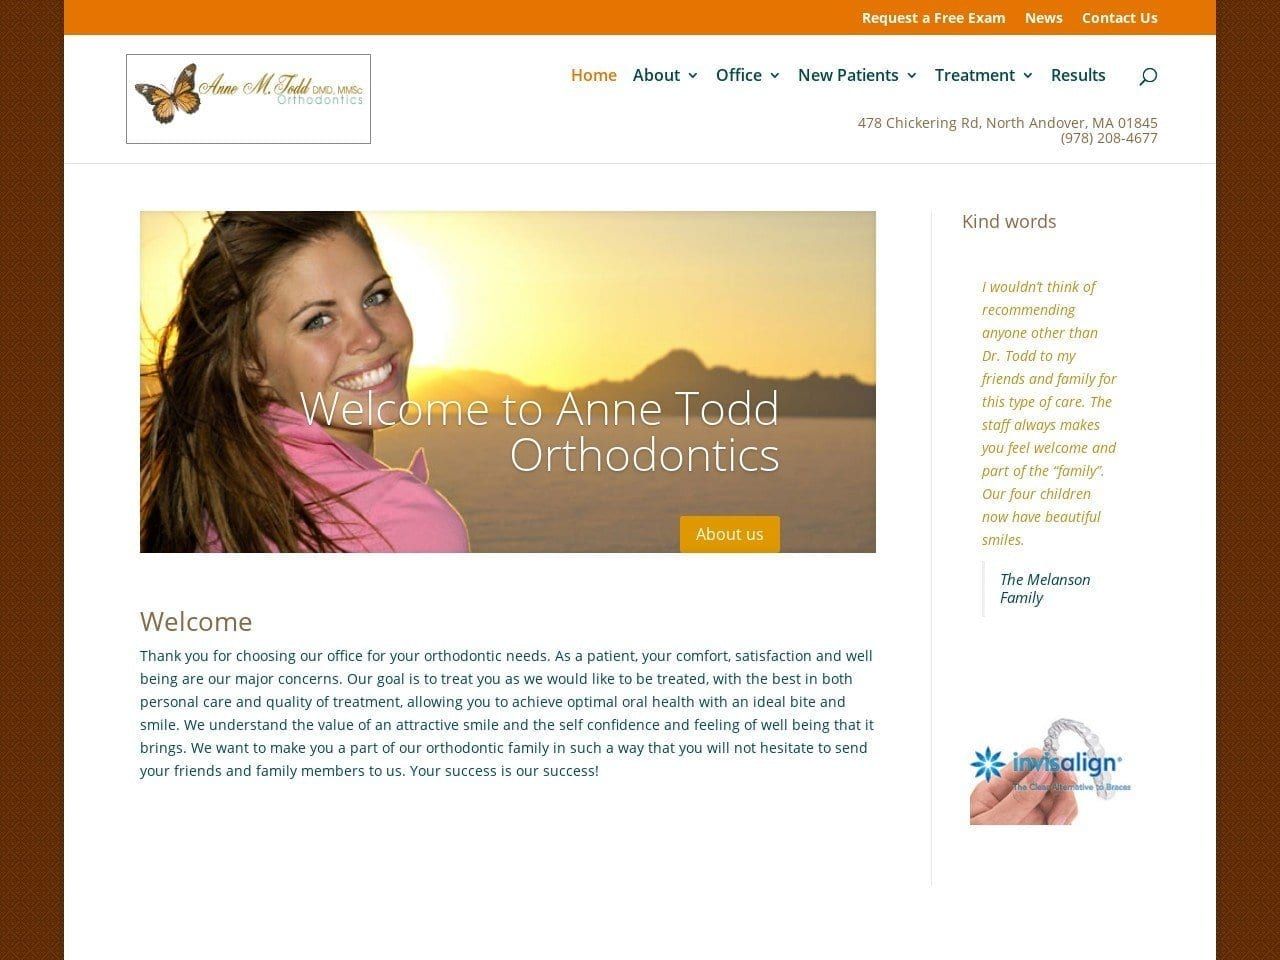 Anne Todd Orthodontics Website Screenshot from annetoddorthodontics.com